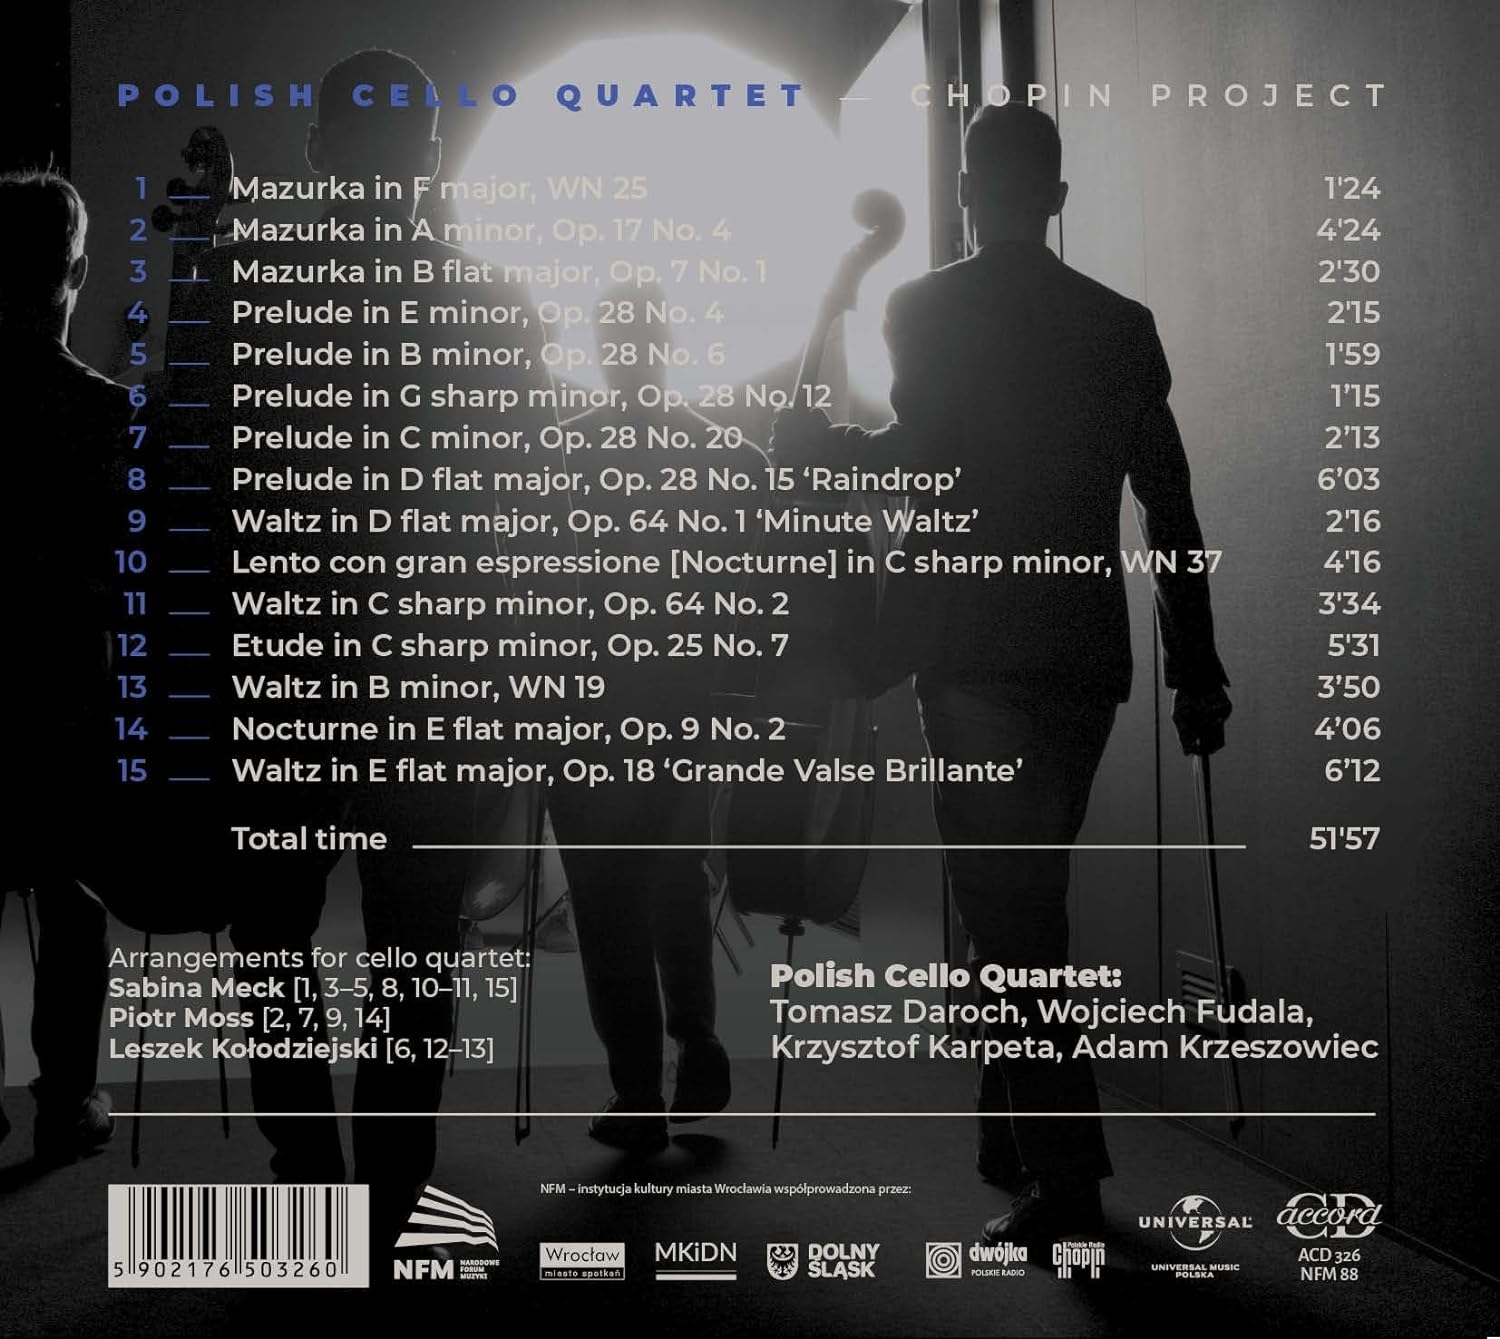 Polish cello Quartet 쇼팽: 마주르카 · 프렐류드 · 녹턴 · 에튀드 외  (Chopin Project)